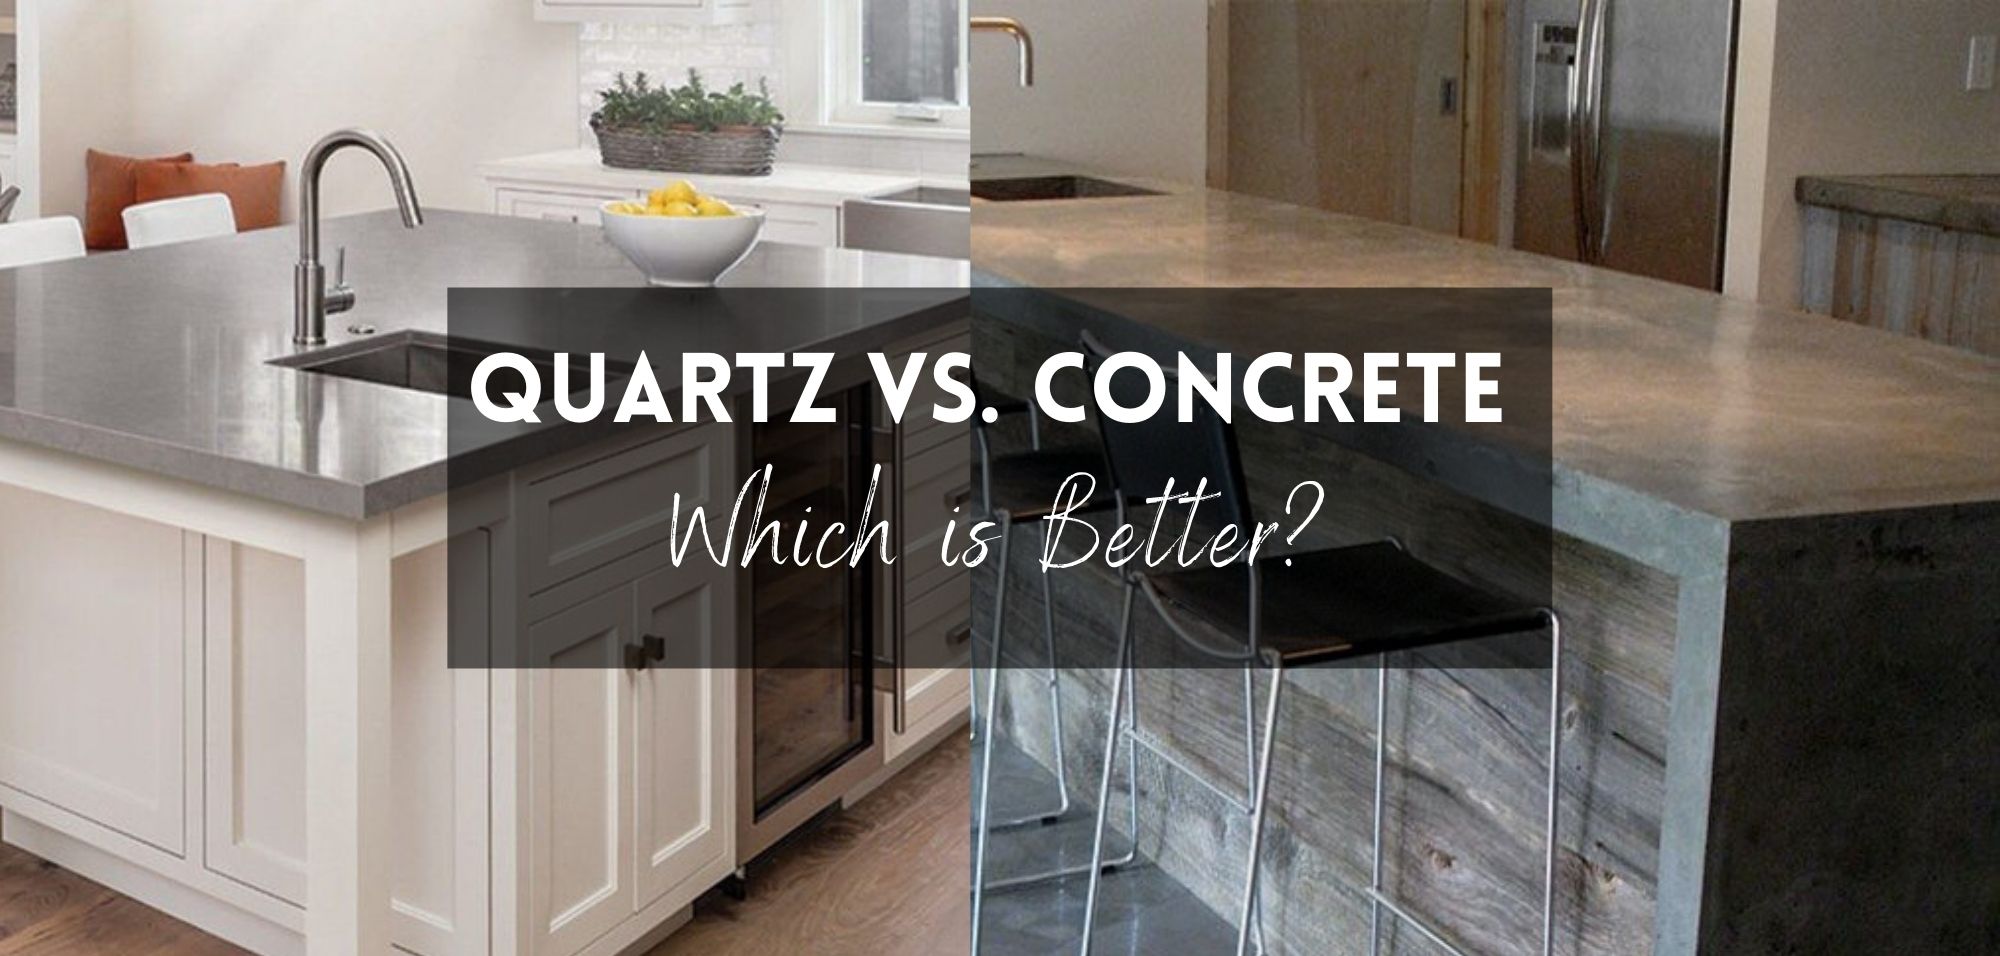 Quartz vs concrete Countertops Which is Better?